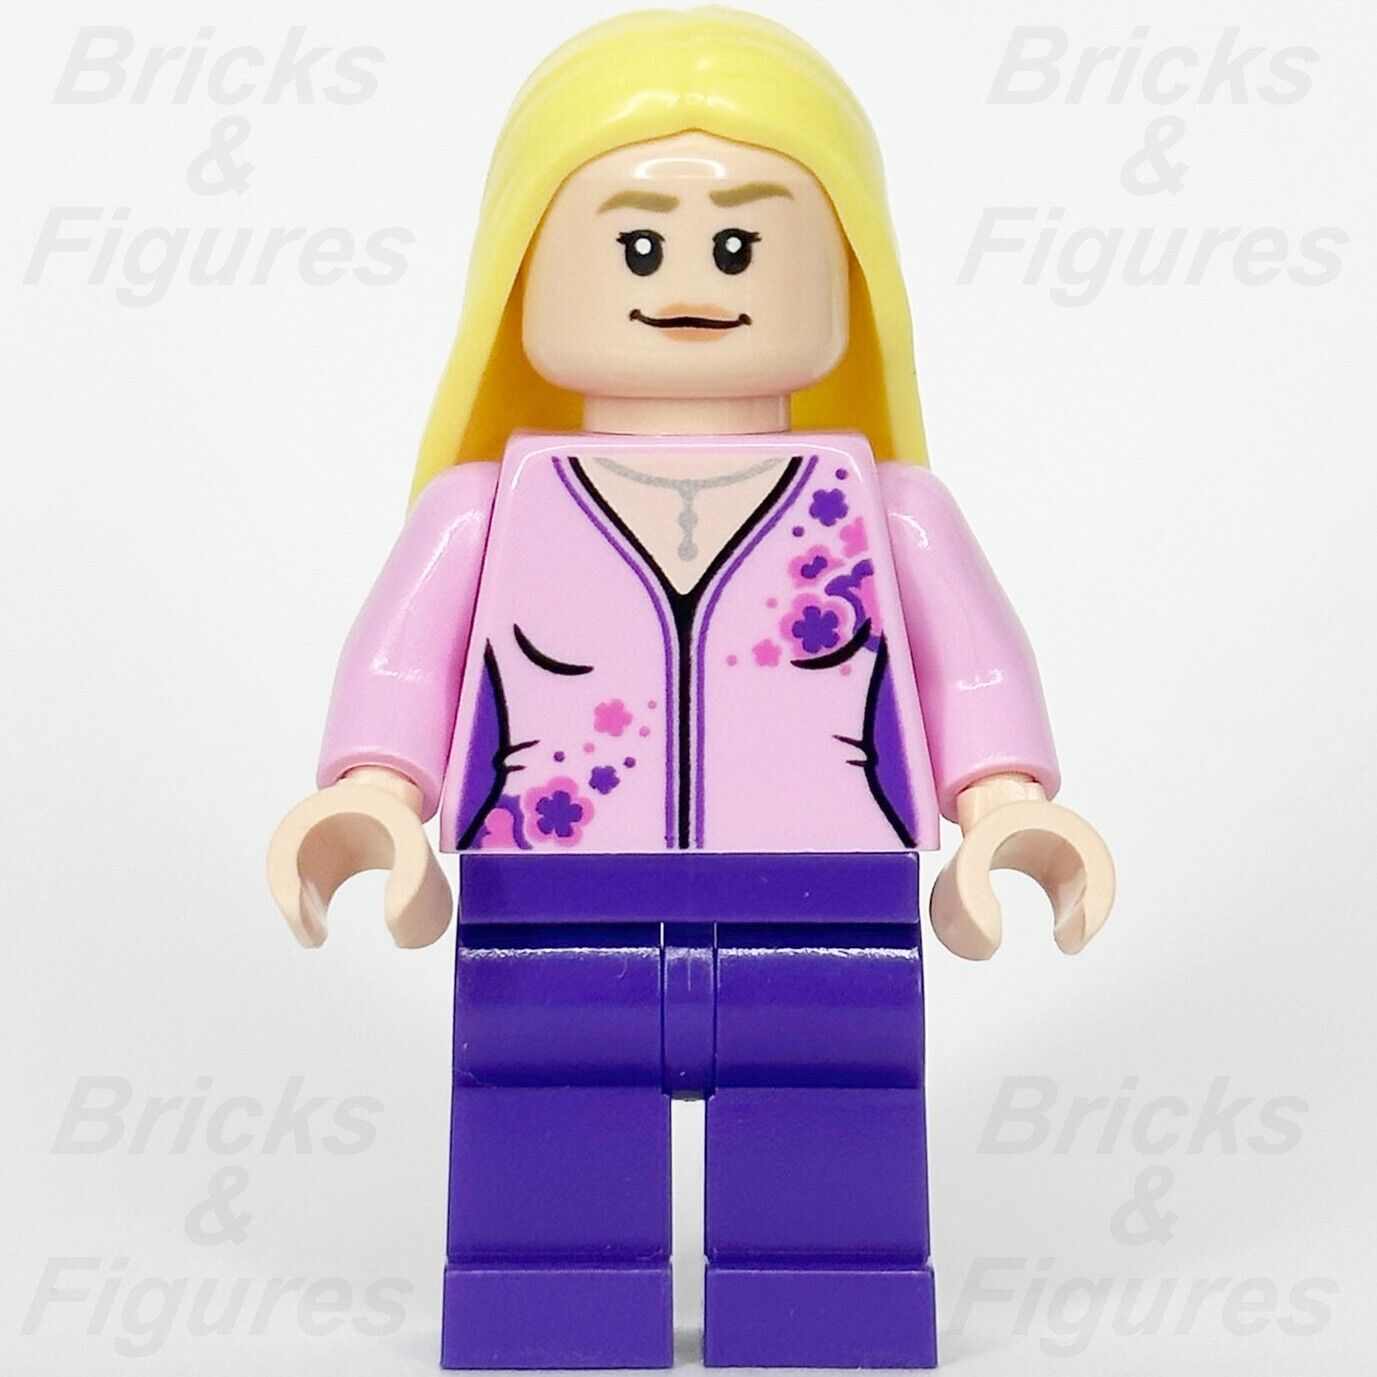 LEGO Creator Phoebe Buffay Minifigure F·R·I·E·N·D·S Friends TV Series 10292 1